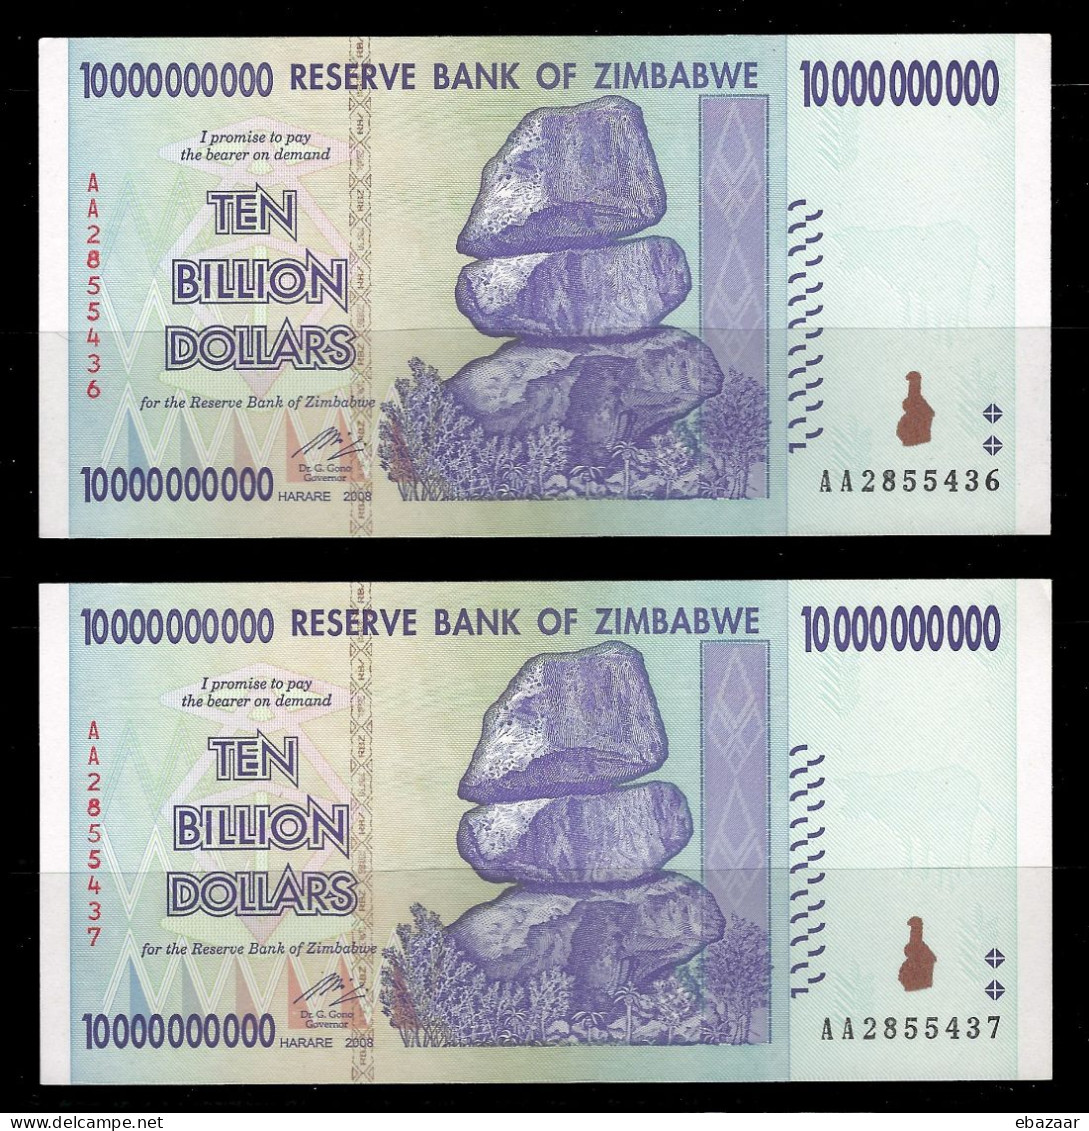 Zimbabwe 2008 Pair Banknotes 10 Billion Dollars ($10.000.000.000) P-85 Consecutive Serial Number XF AUNC - Zimbabwe